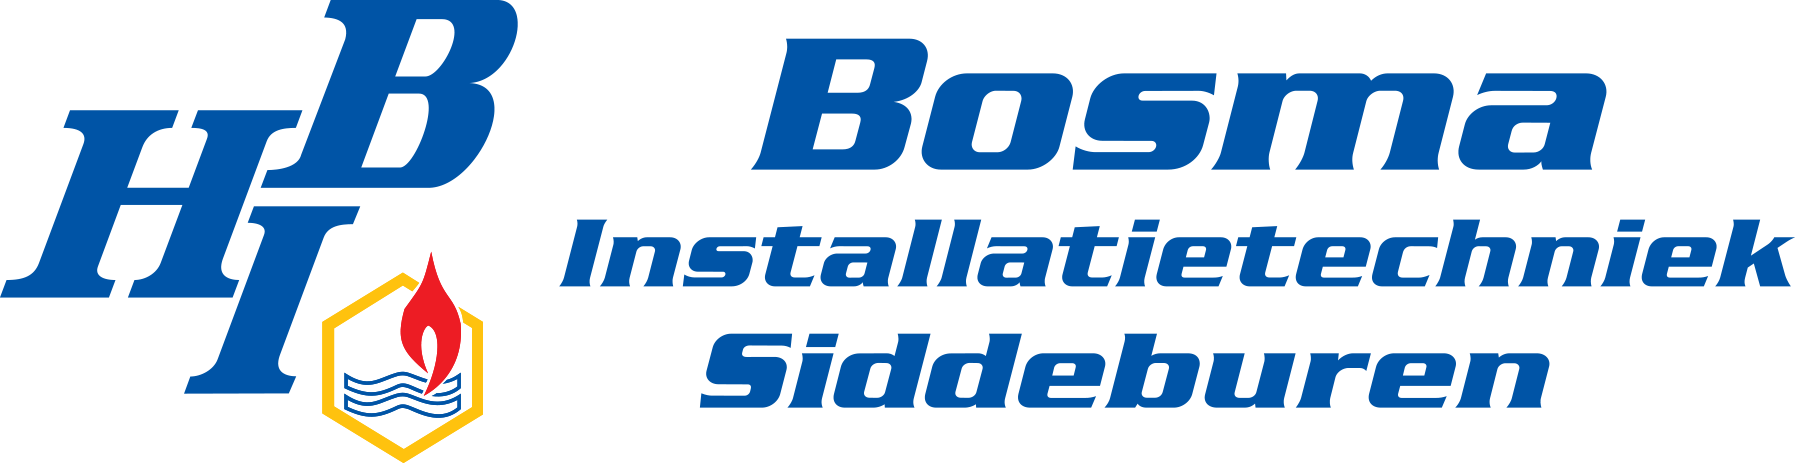 H. Bosma Installatietechniek Siddeburen